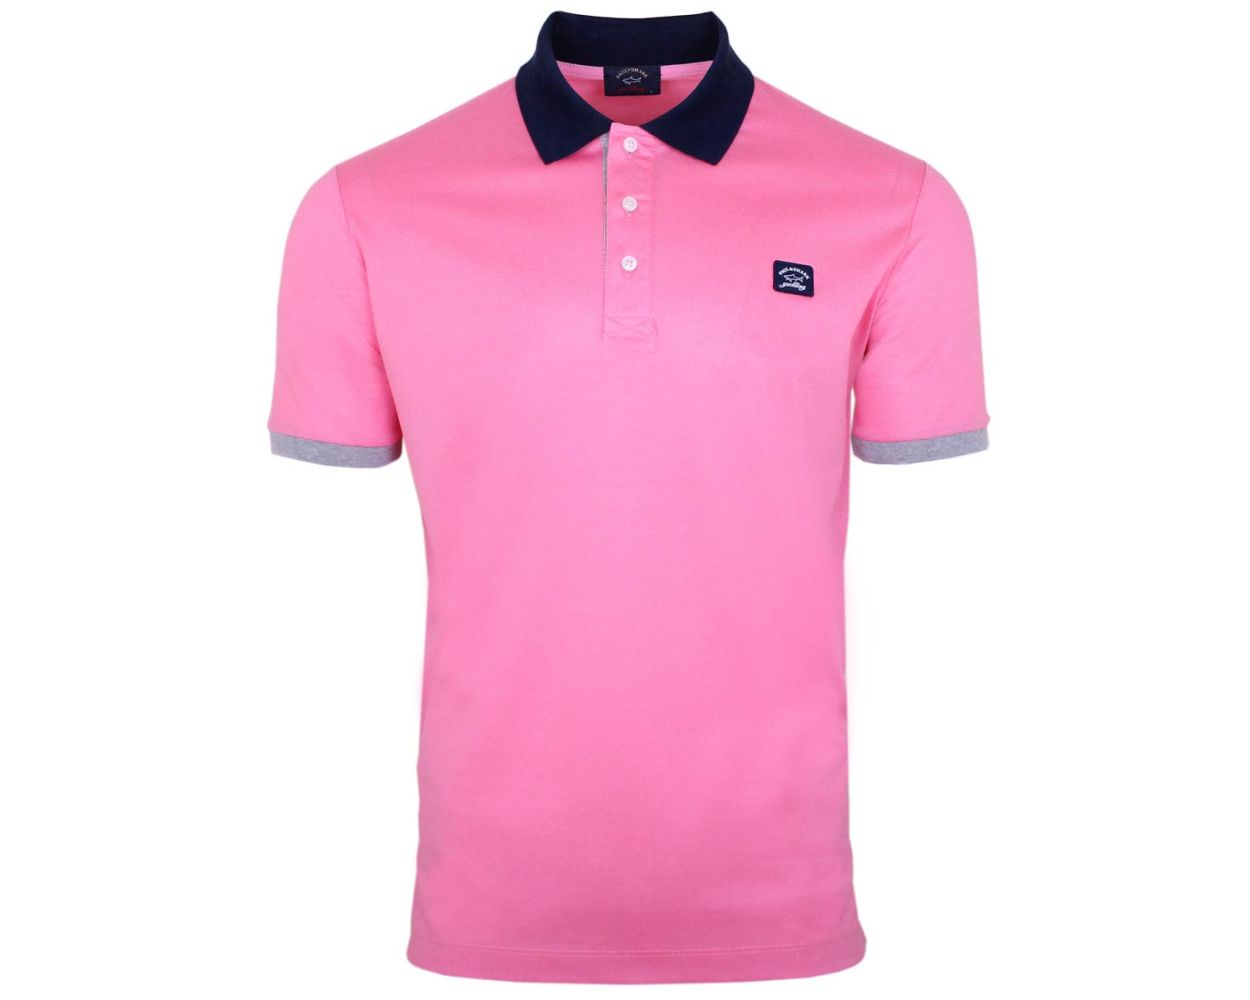 Paul and Shark Mens Pique Cotton Polo Shirt Pink 